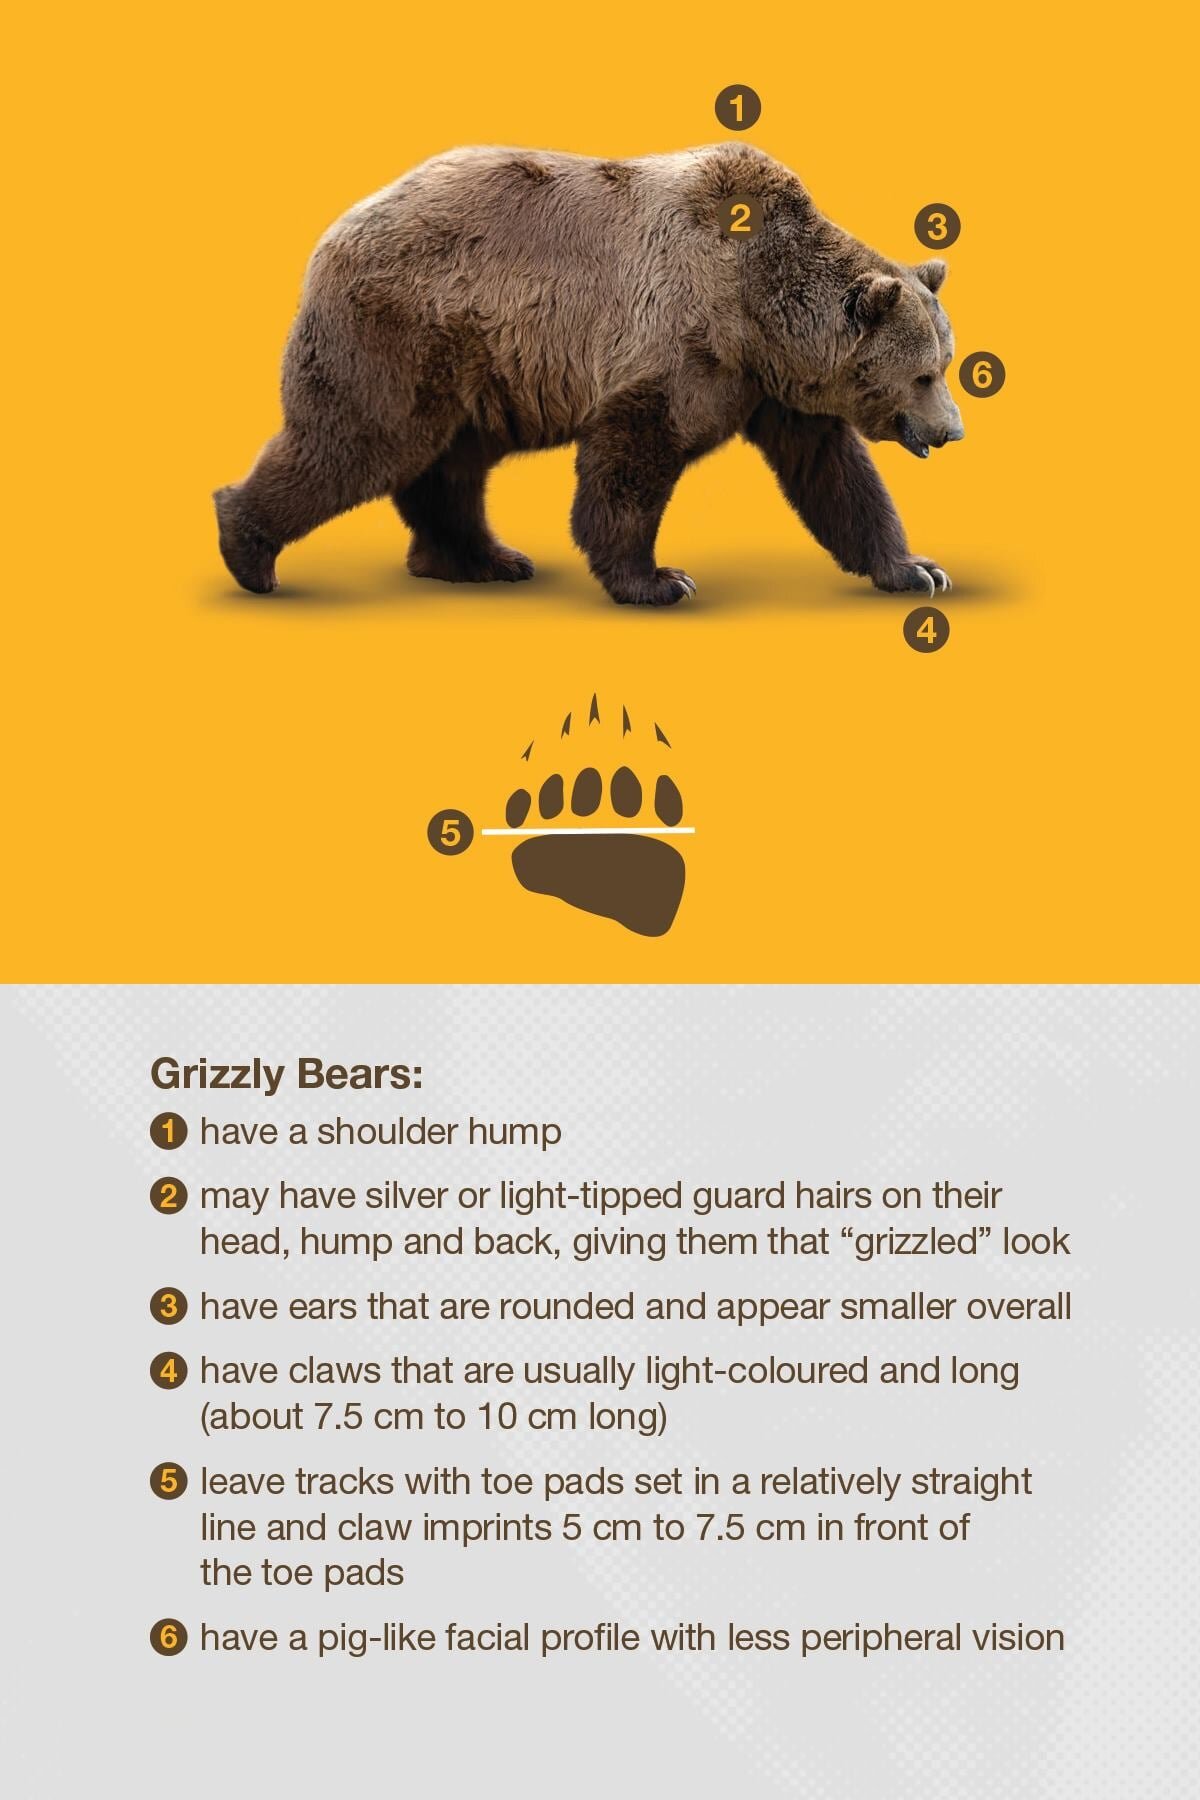 Know the Language of Black Bears